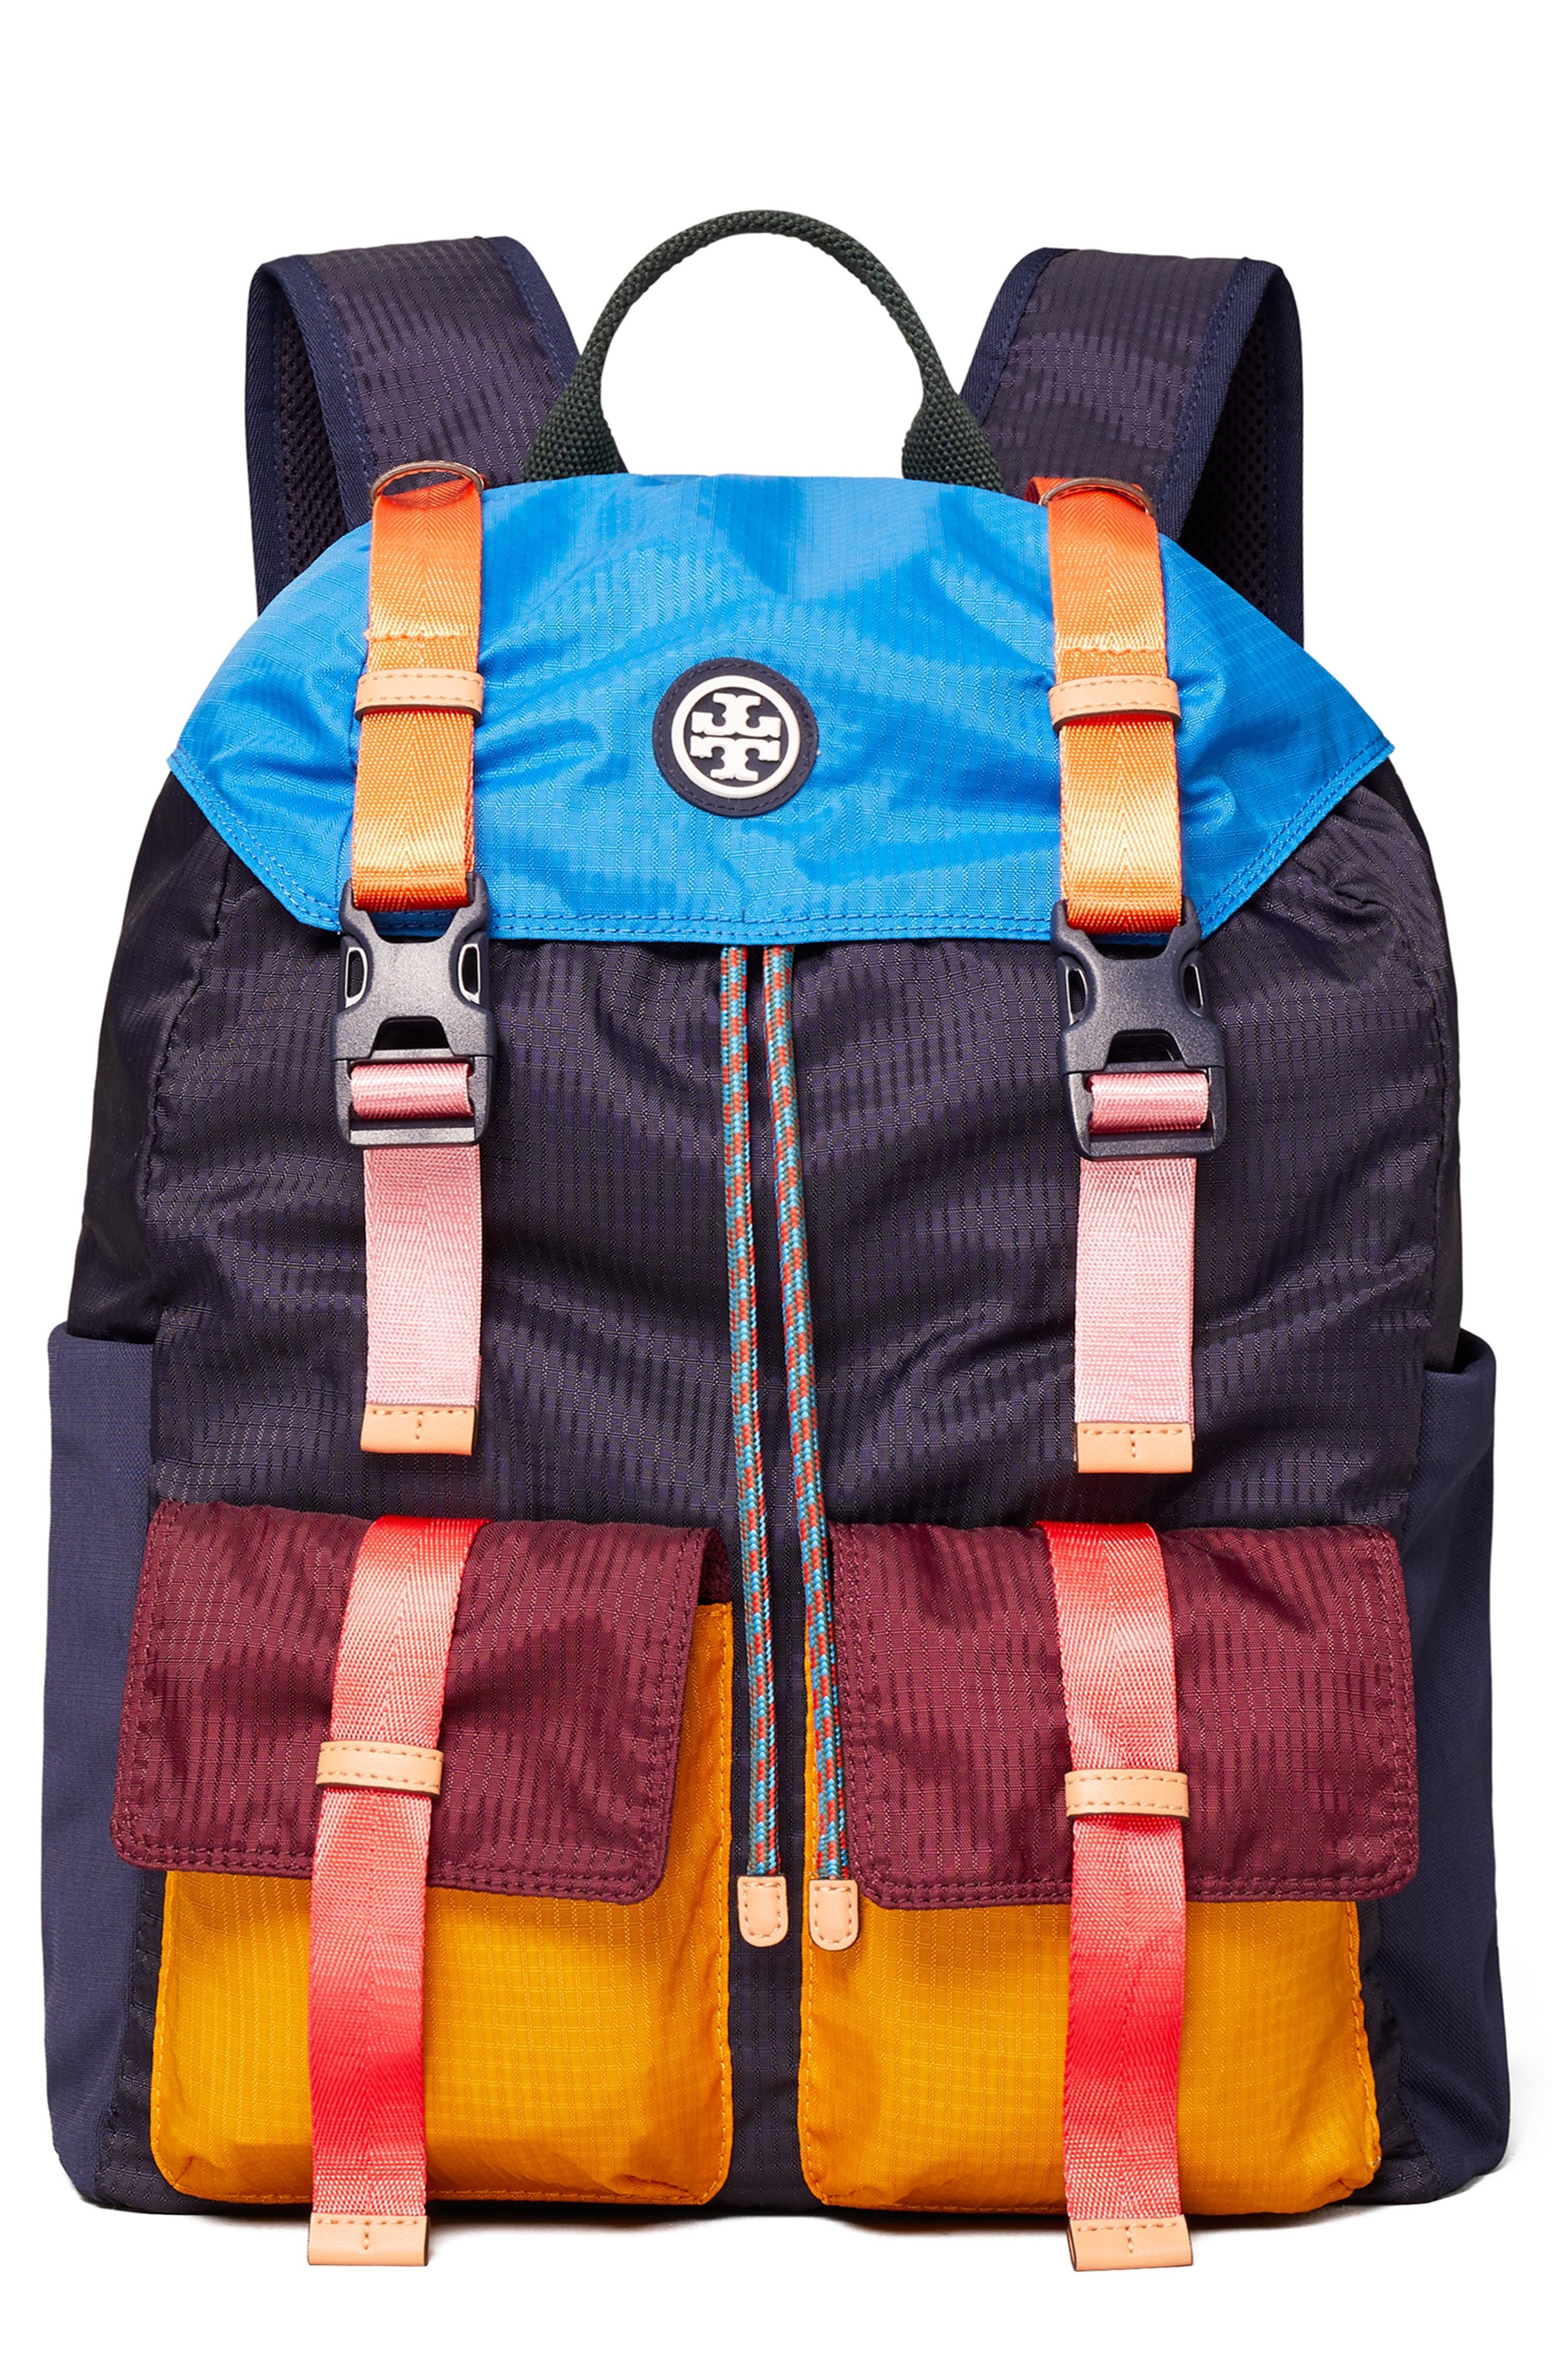 tory burch sport backpack